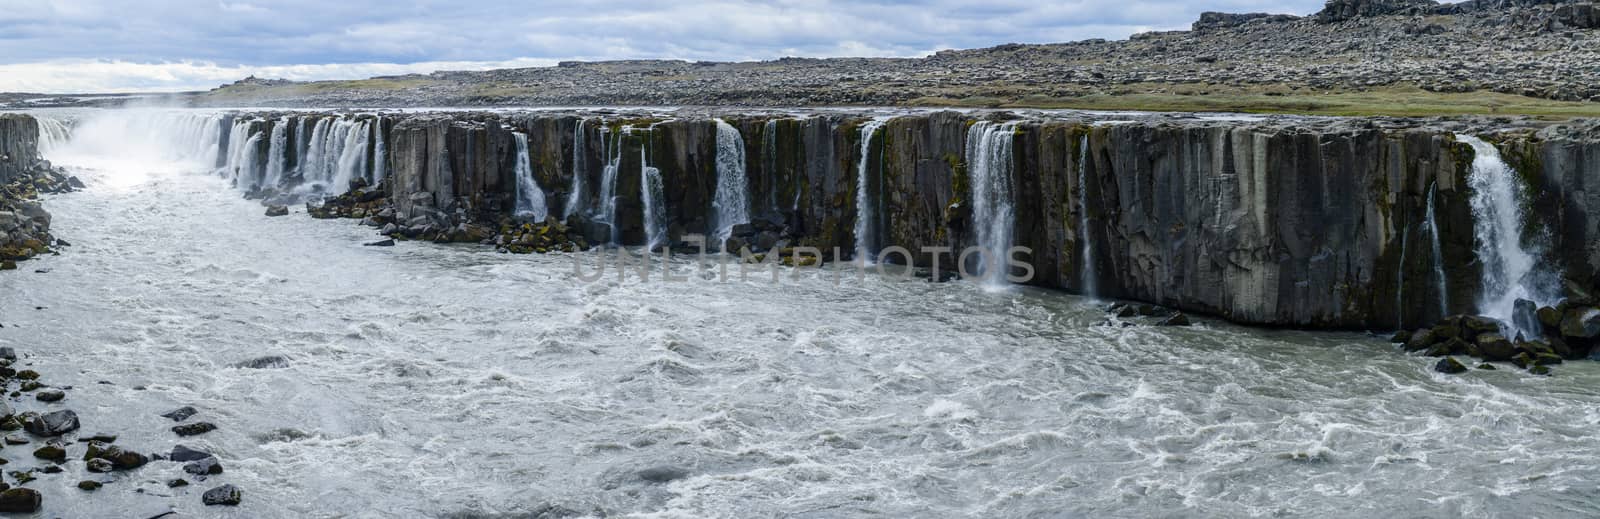 Selfoss waterfall, Northeast Iceland by RnDmS